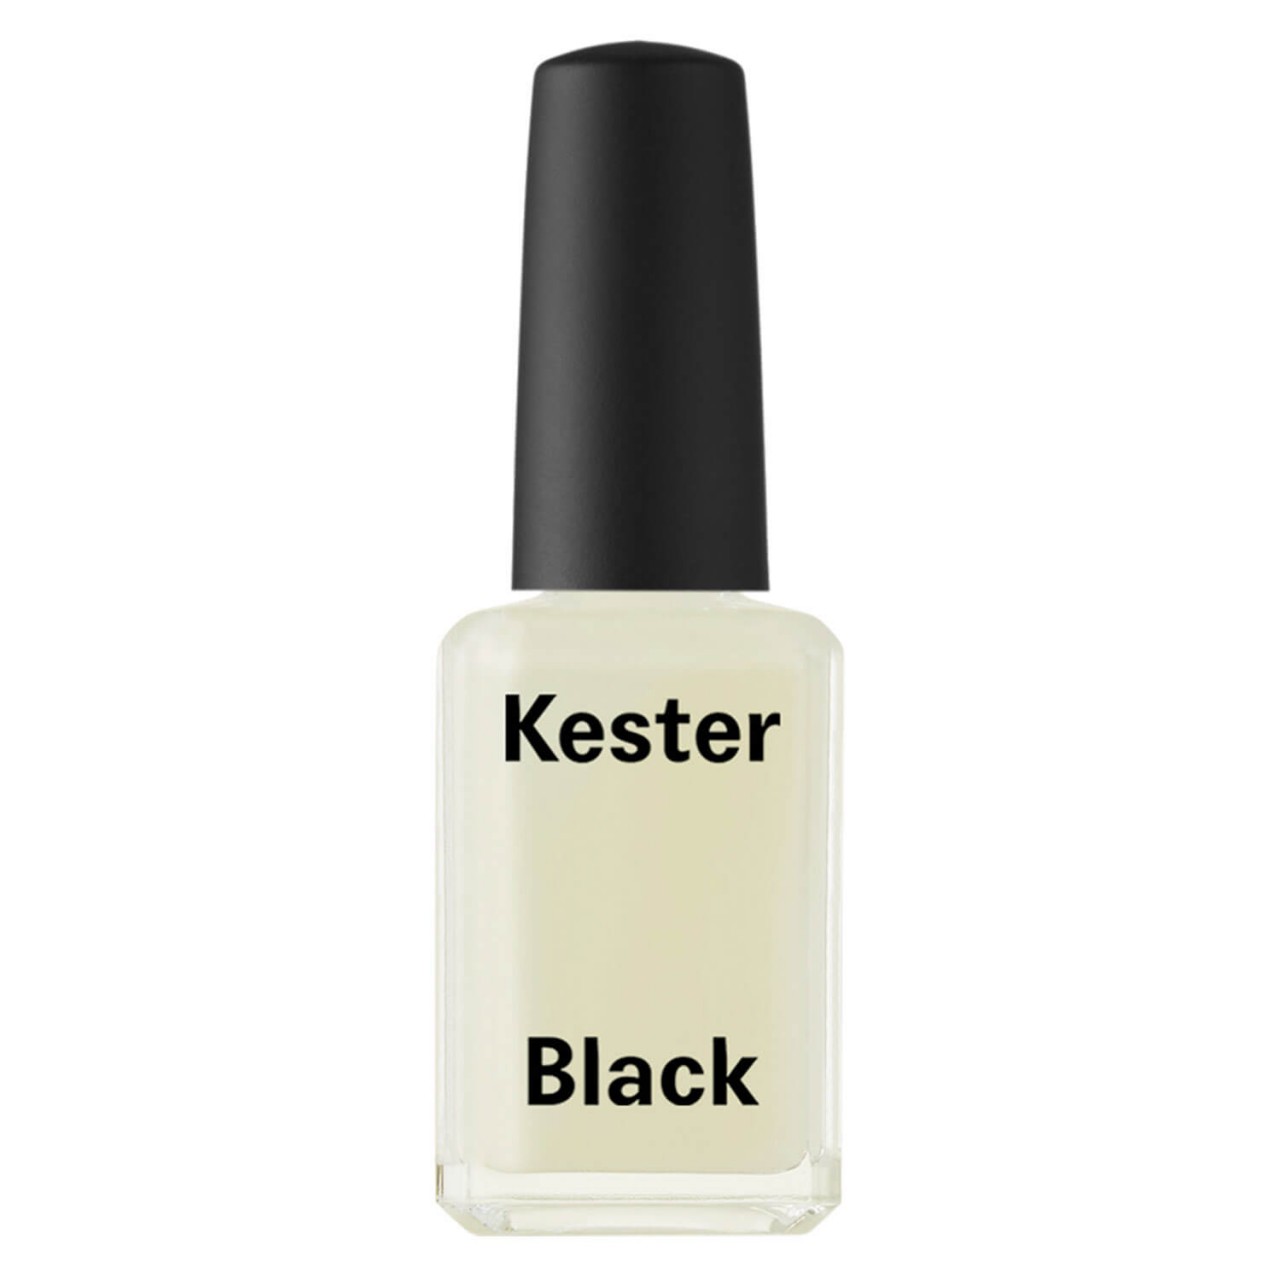 KB Colours - Daisy Chain von Kester Black